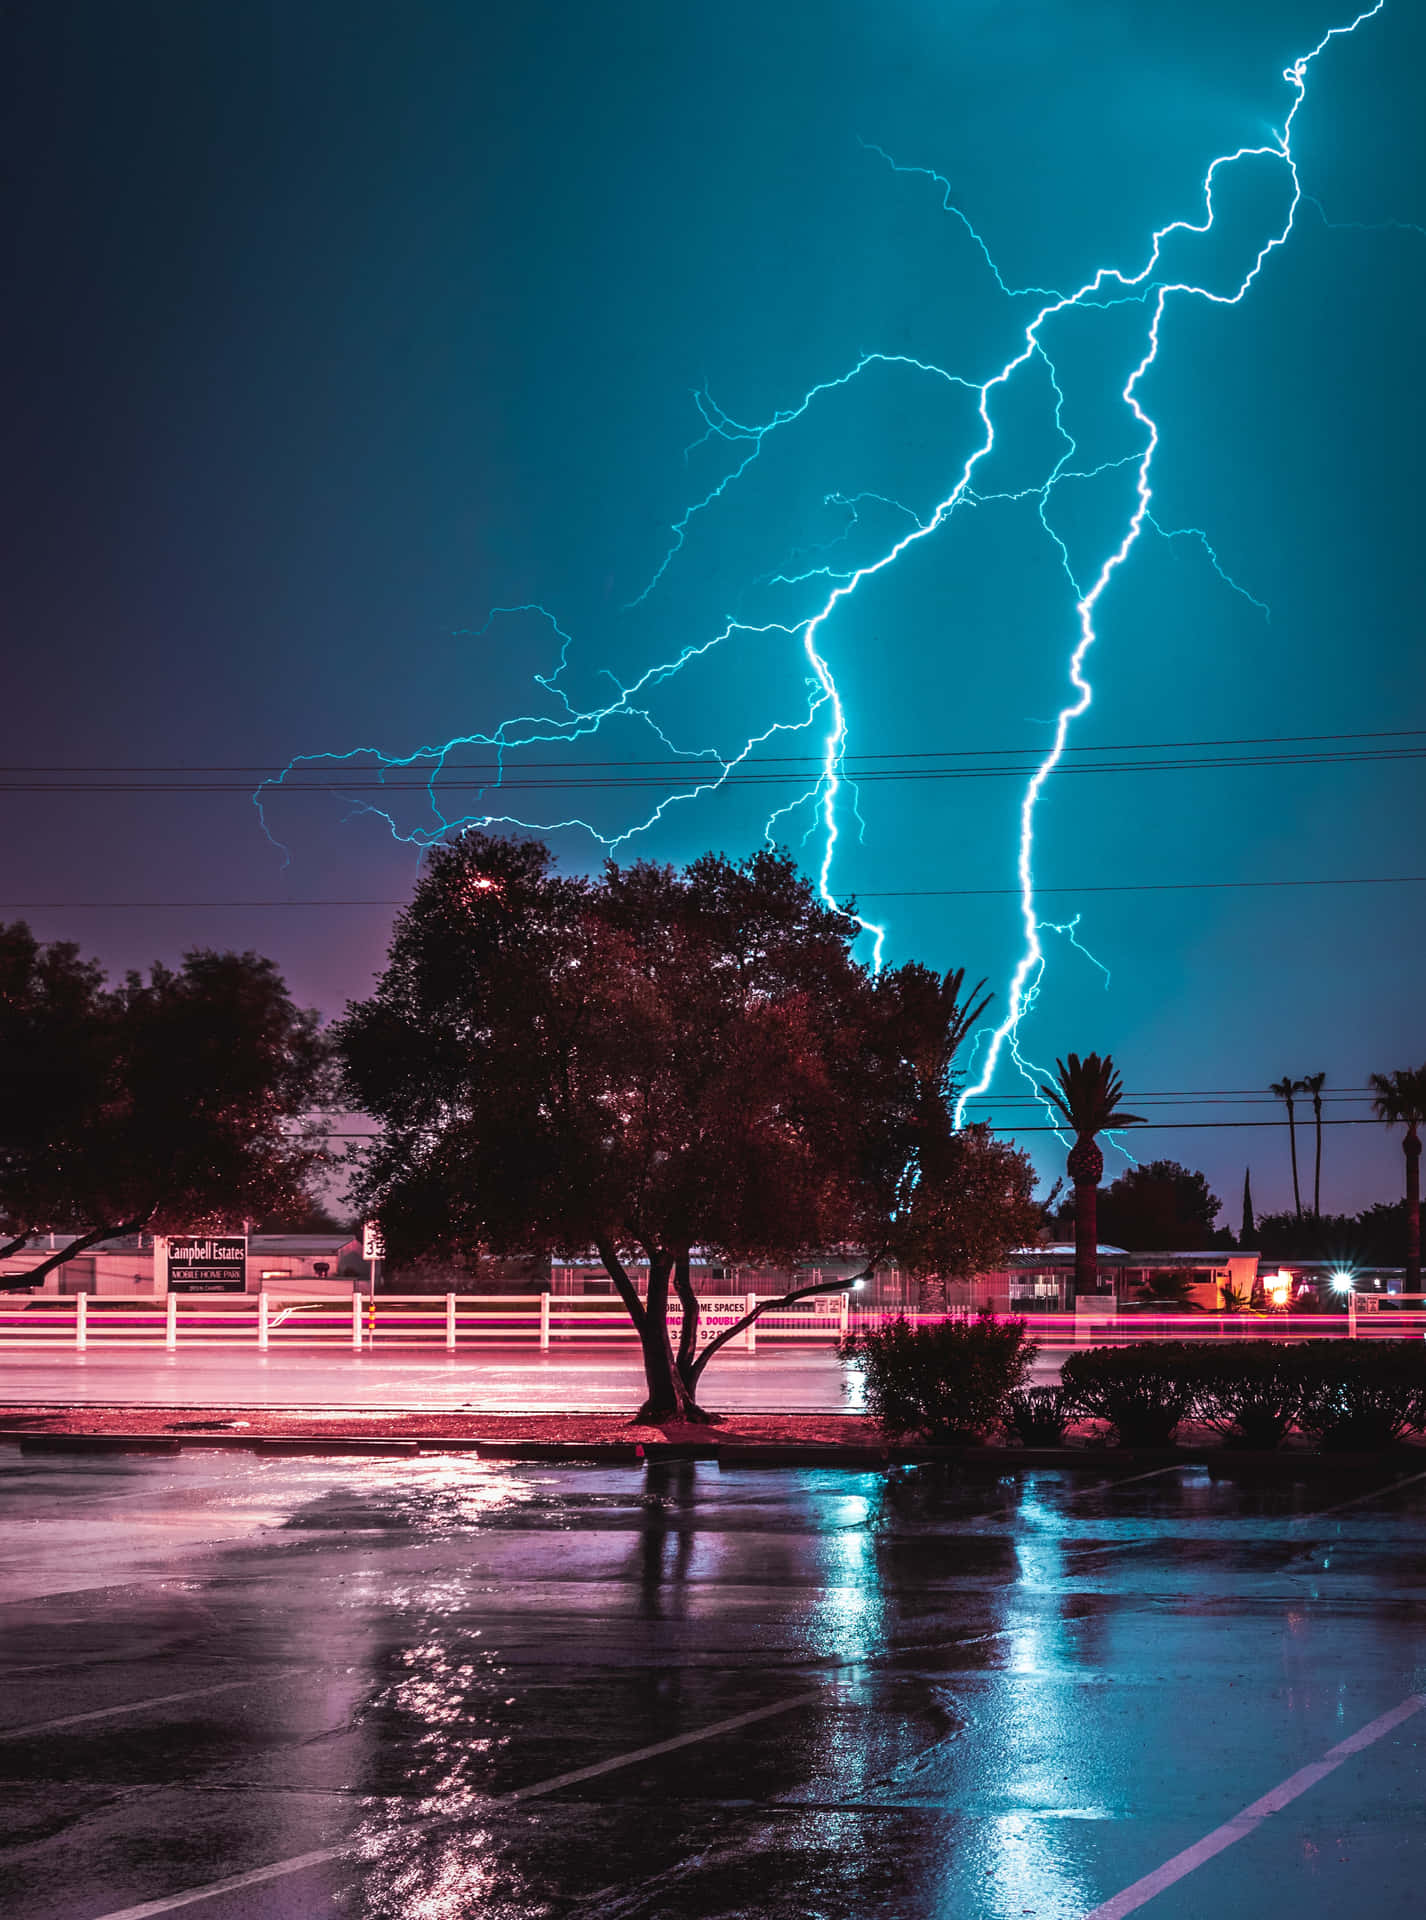 Image  A jagged streak of powerful blue lightning sparks against a black sky.